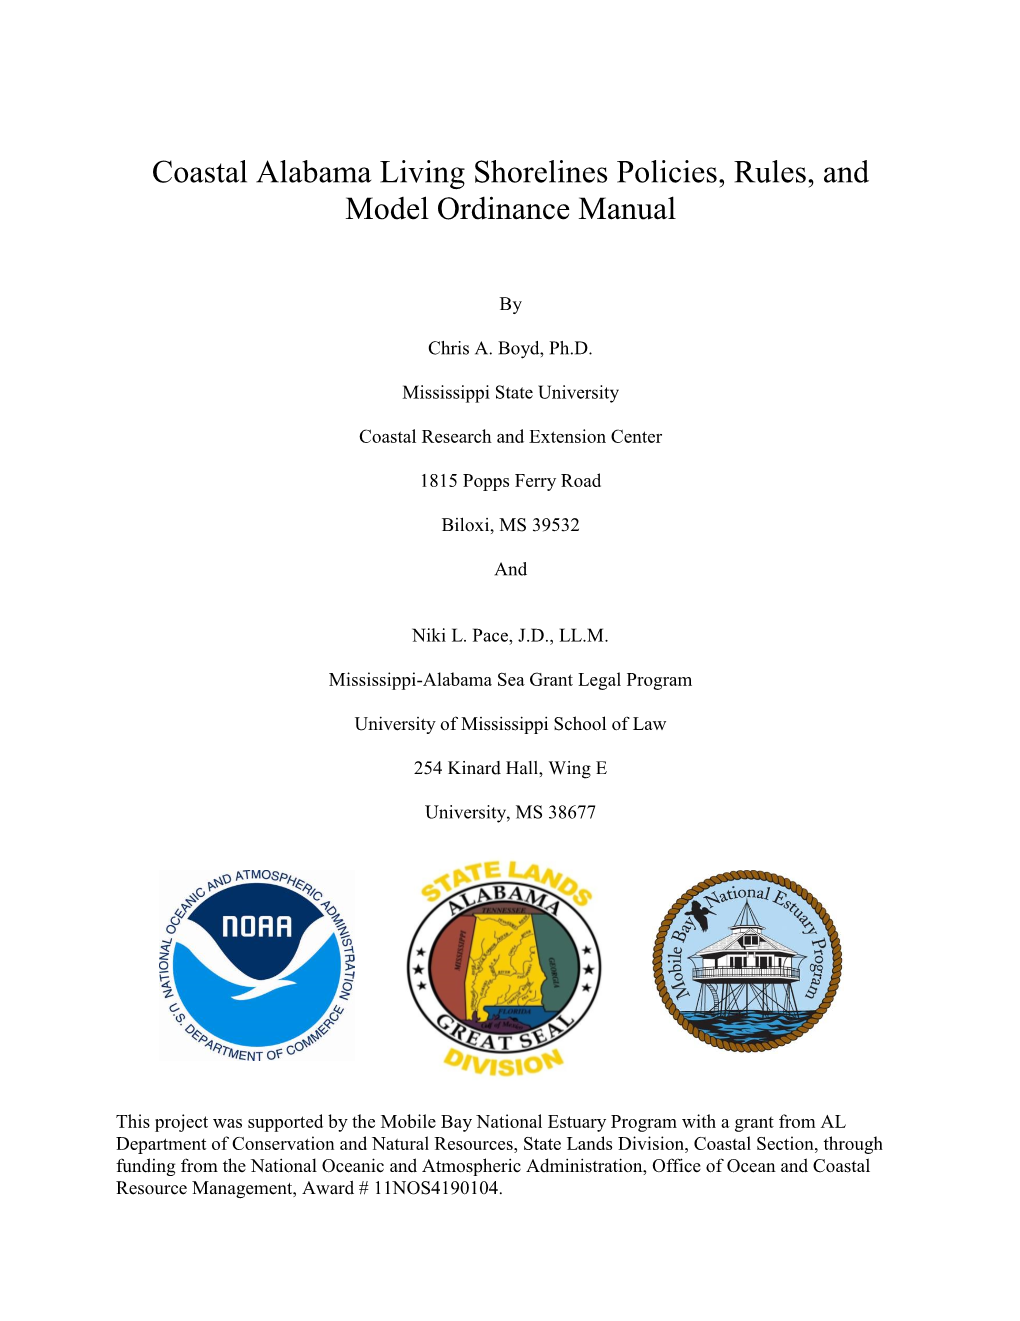 Coastal Alabama Living Shorelines Policies, Rules, and Model Ordinance Manual